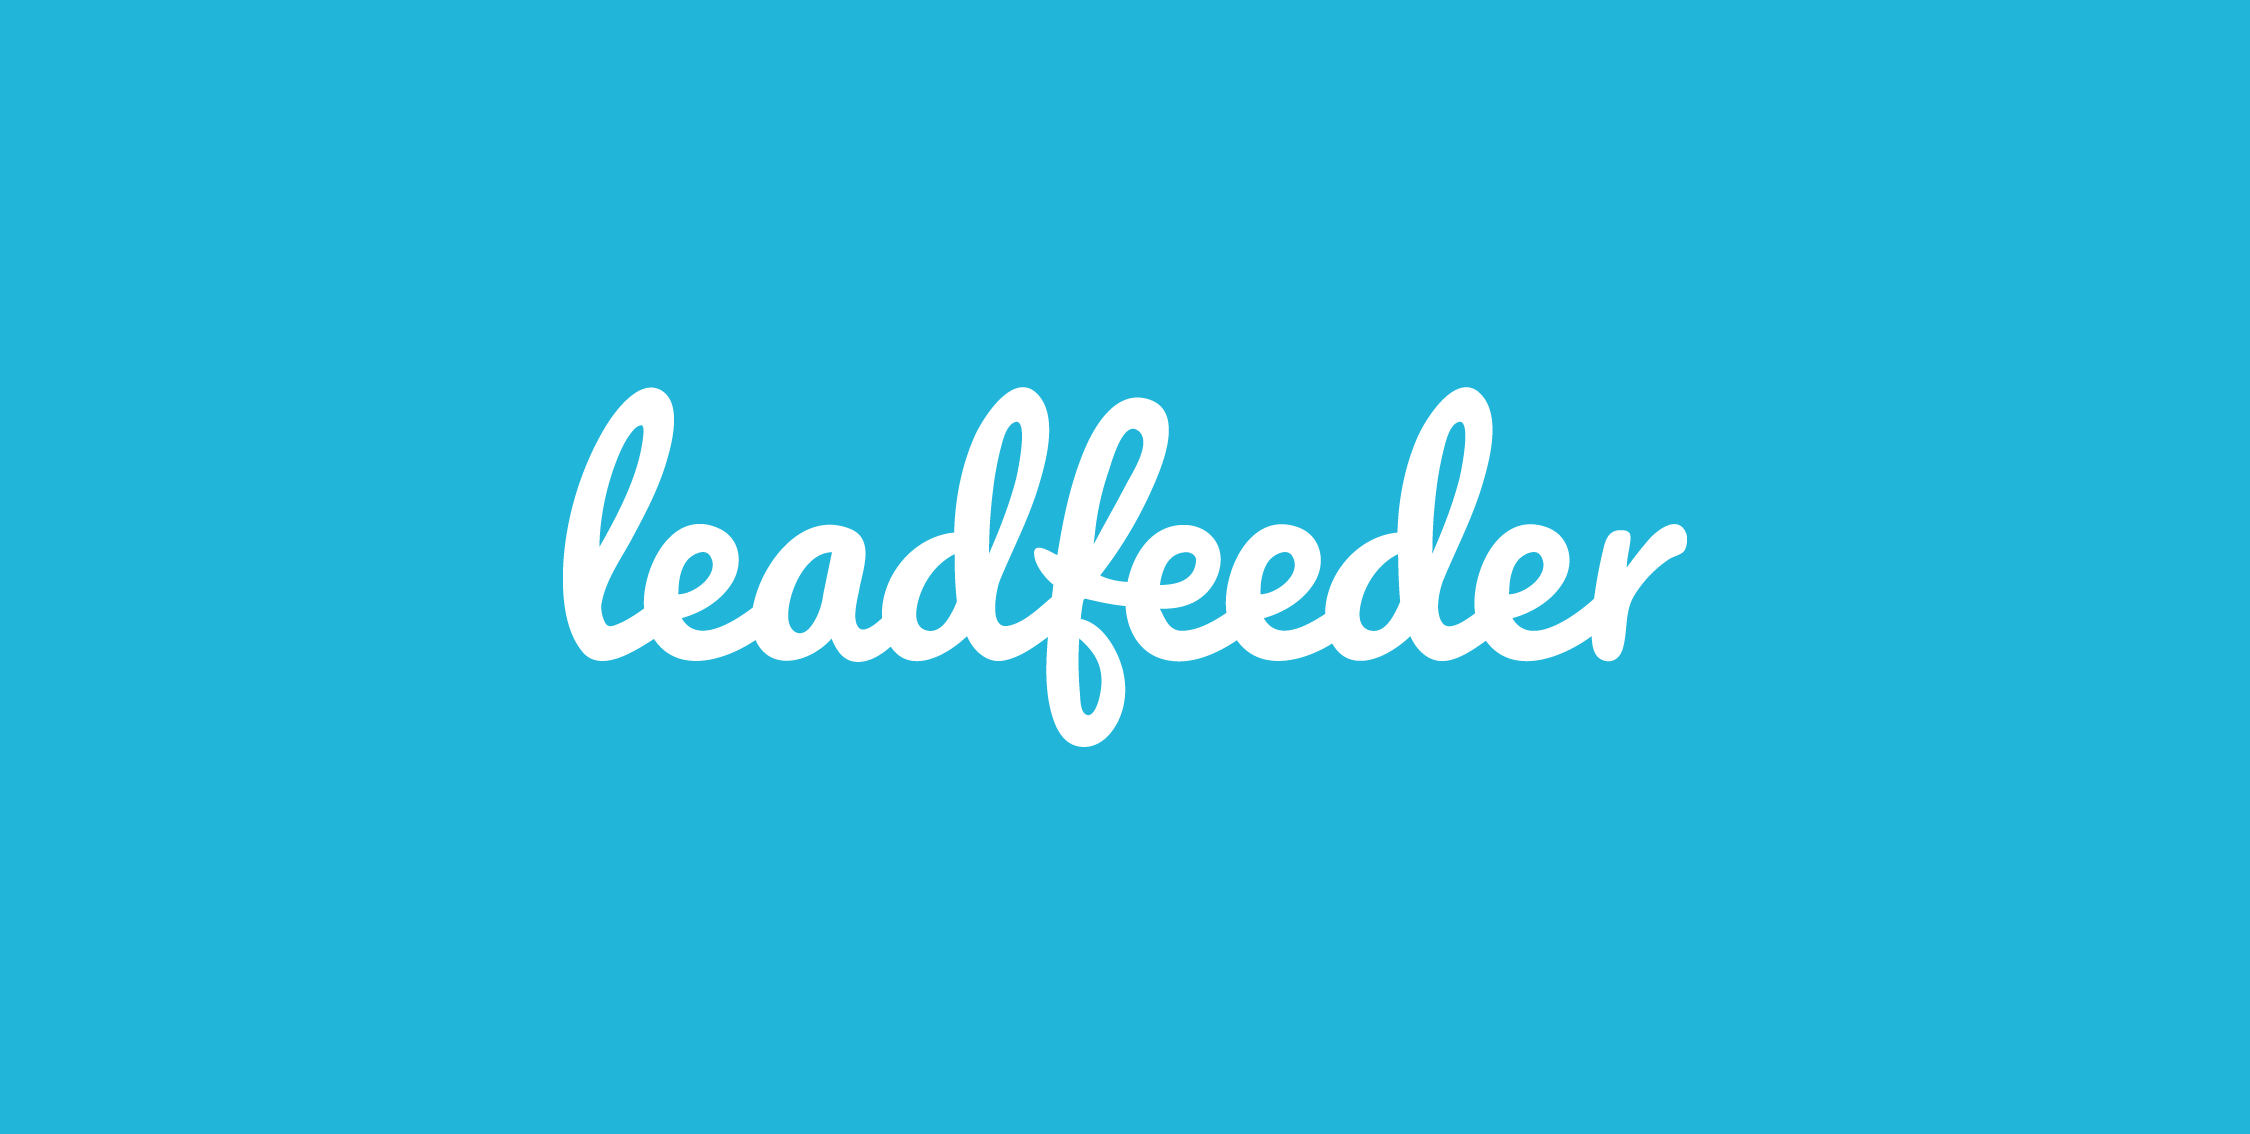 Leadfeeder demand generation tools